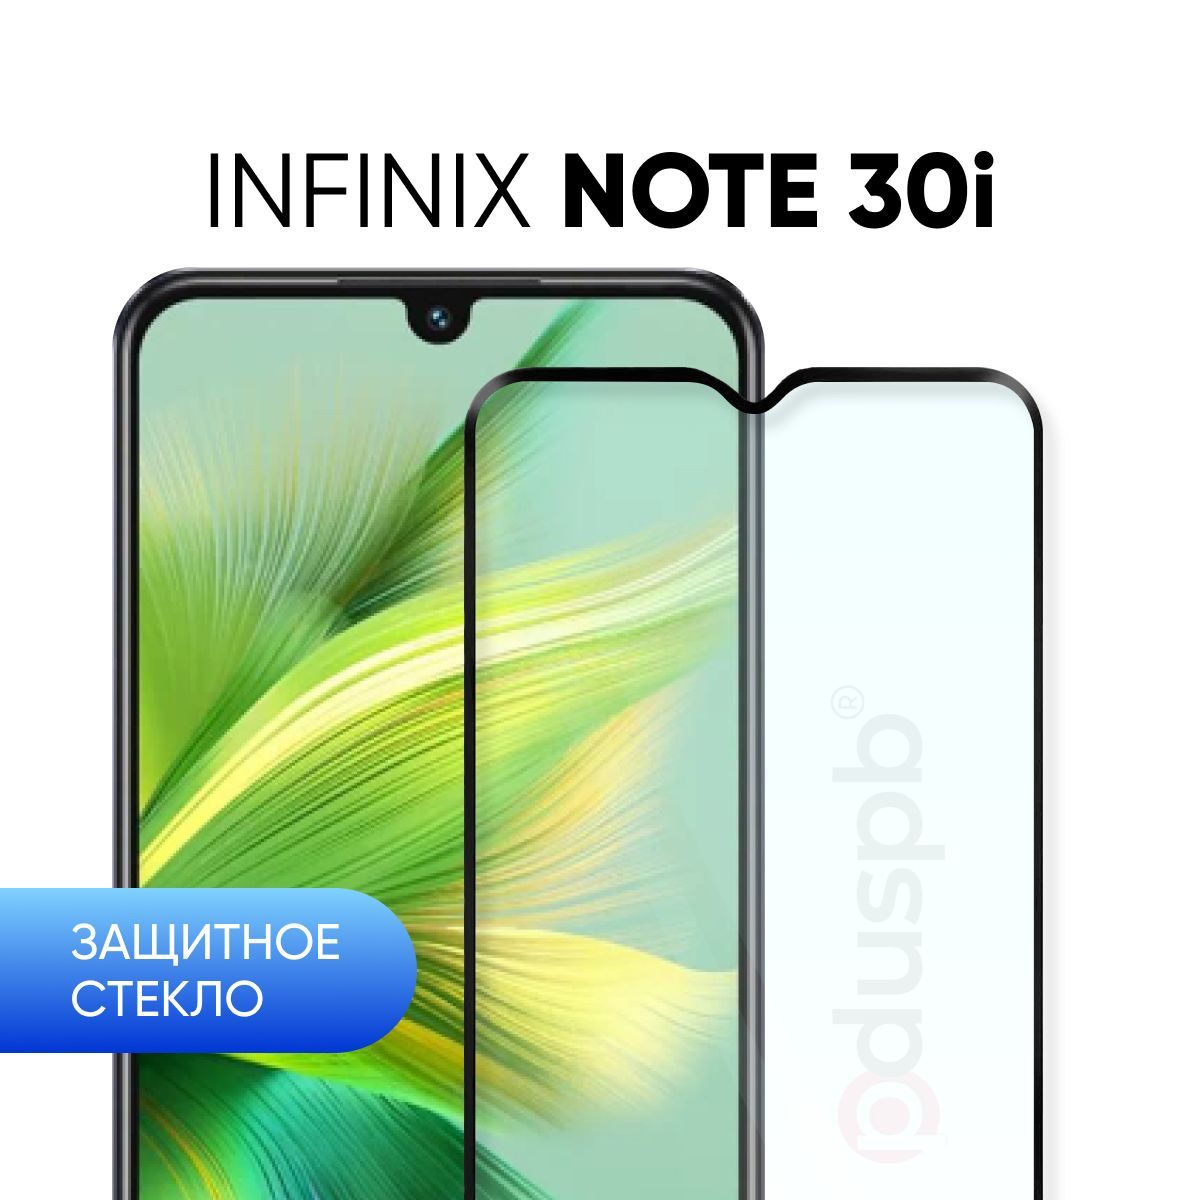 Infinix note 30 8 256 отзывы. Инфиникс Note 30i. Инфиникс ноут 30 i. Смартфон Infinix Note 30i. Infinix Note 30 характеристики.